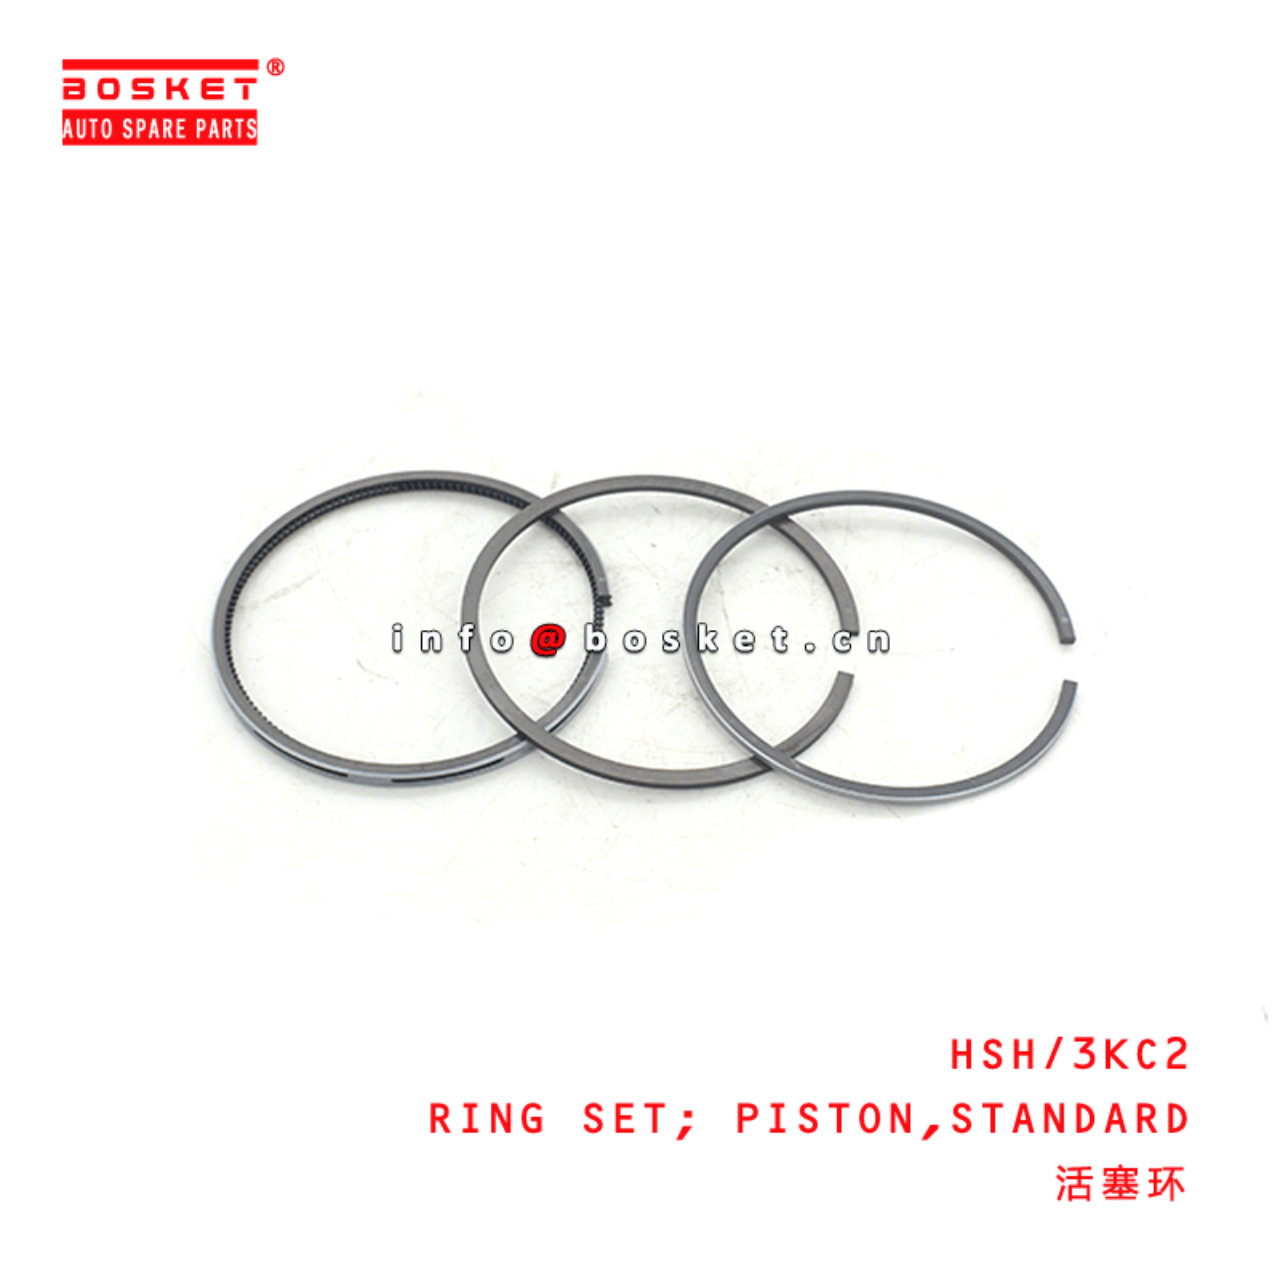  HSH/3KC2 Standard Piston Ring Set Suitable for ISUZU 3KC2